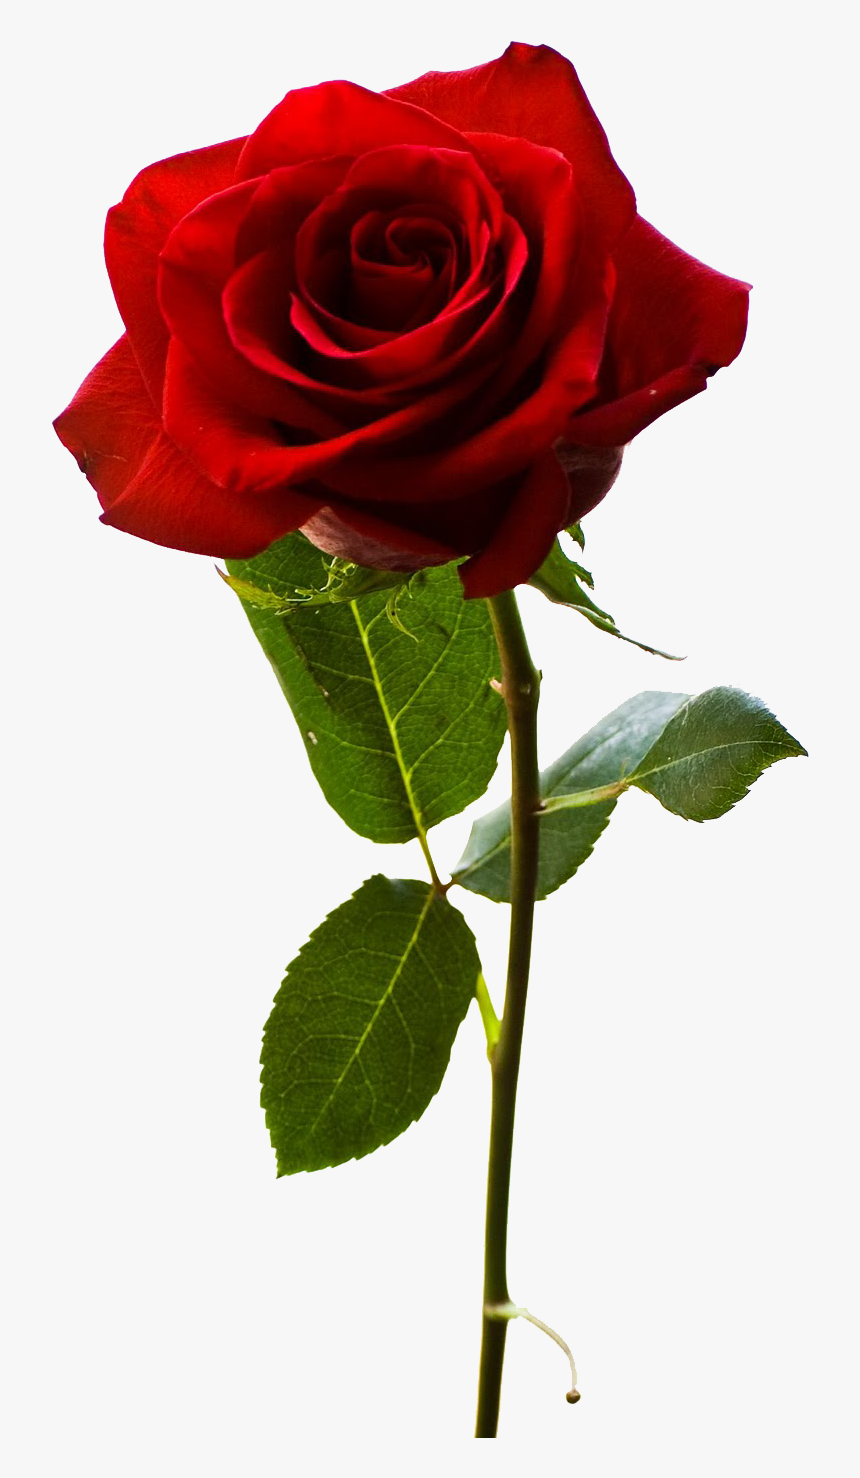 Red Rose - One Rose Flower Png, Transparent Png, Free Download